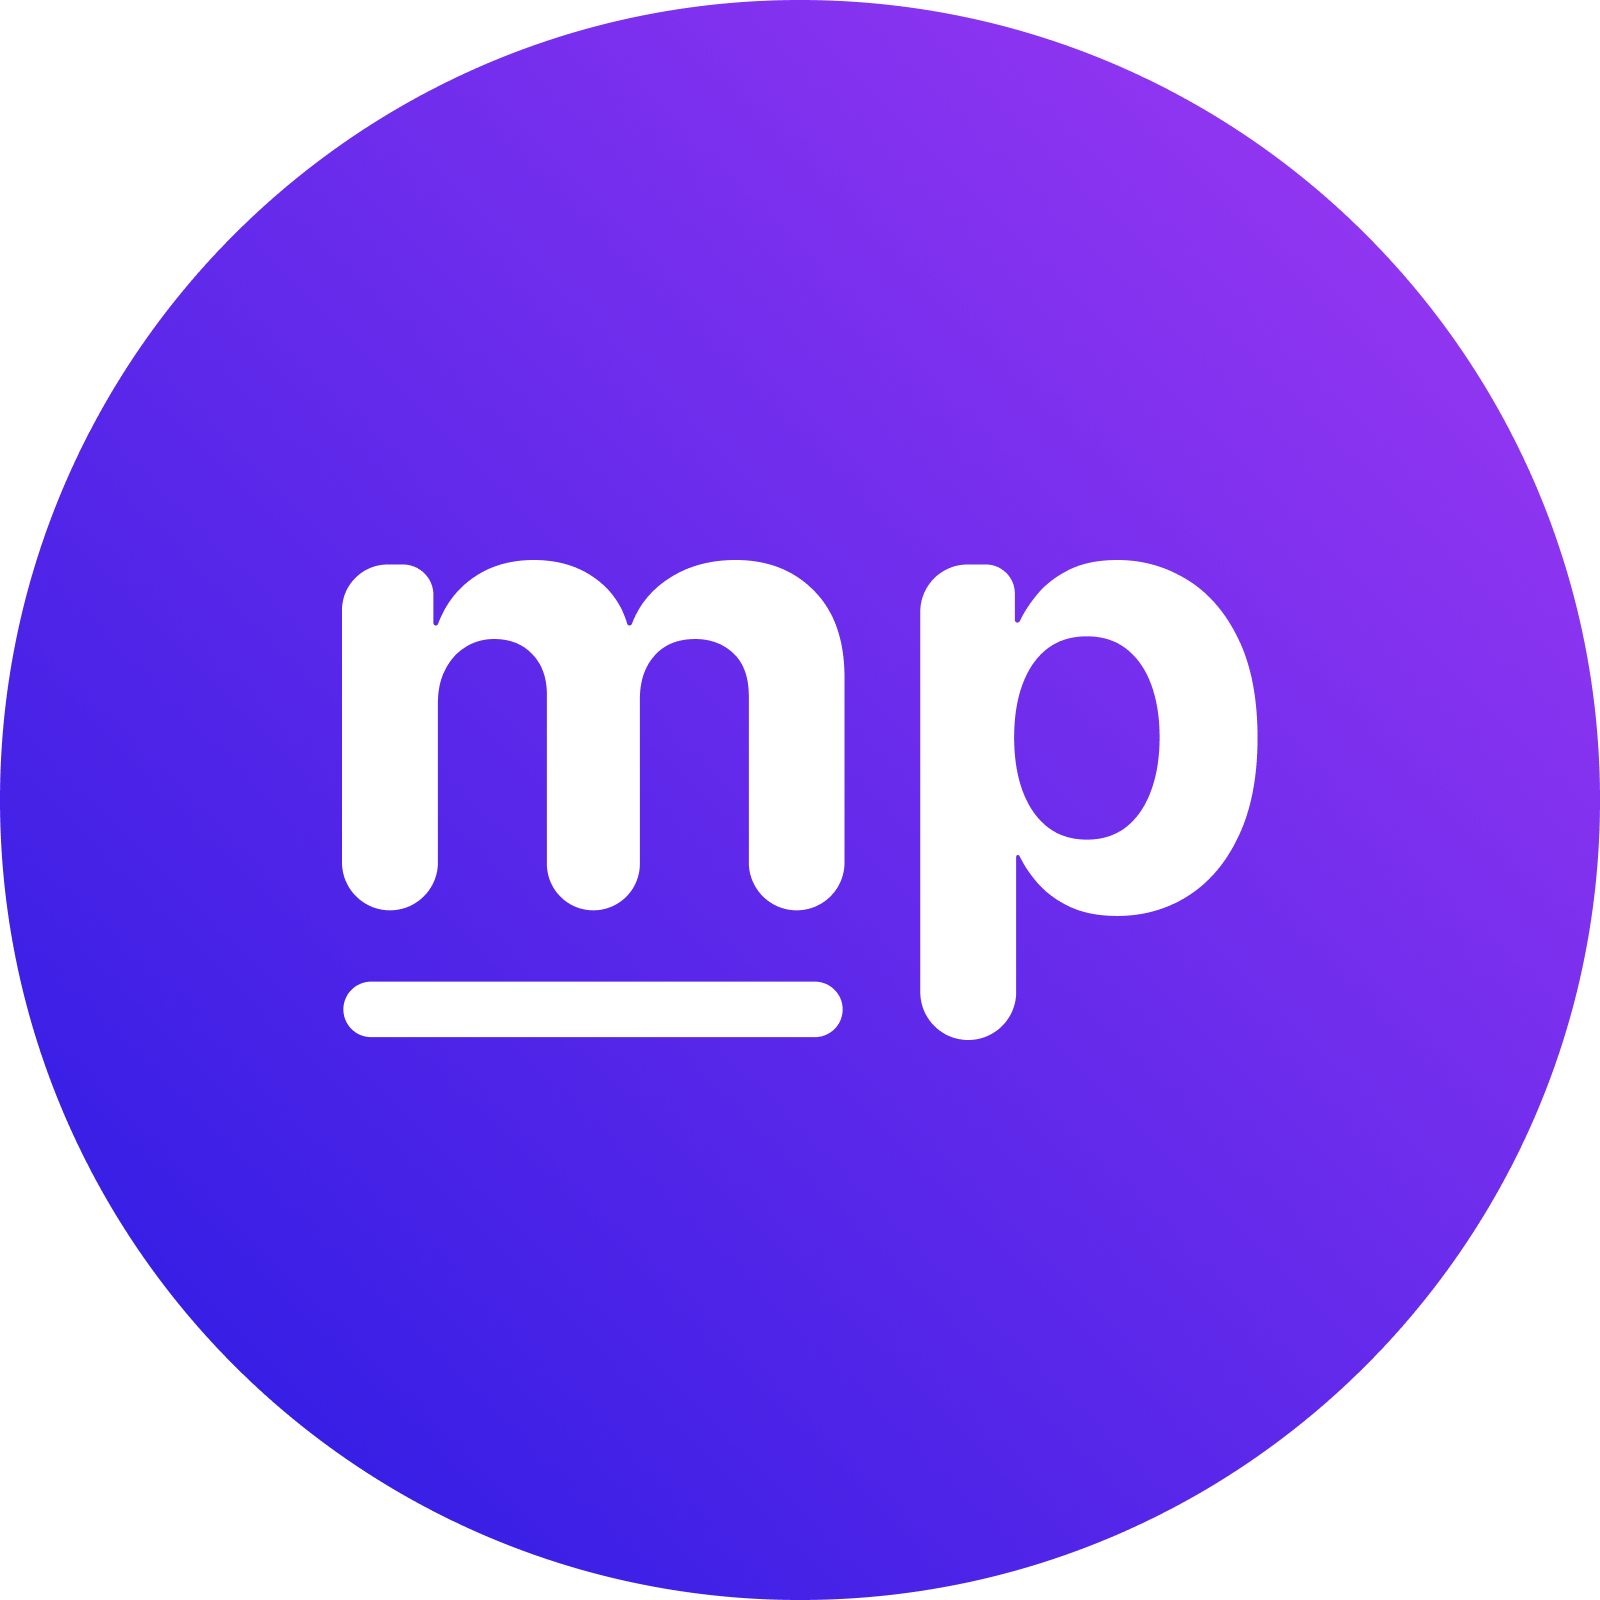 MindPal logo